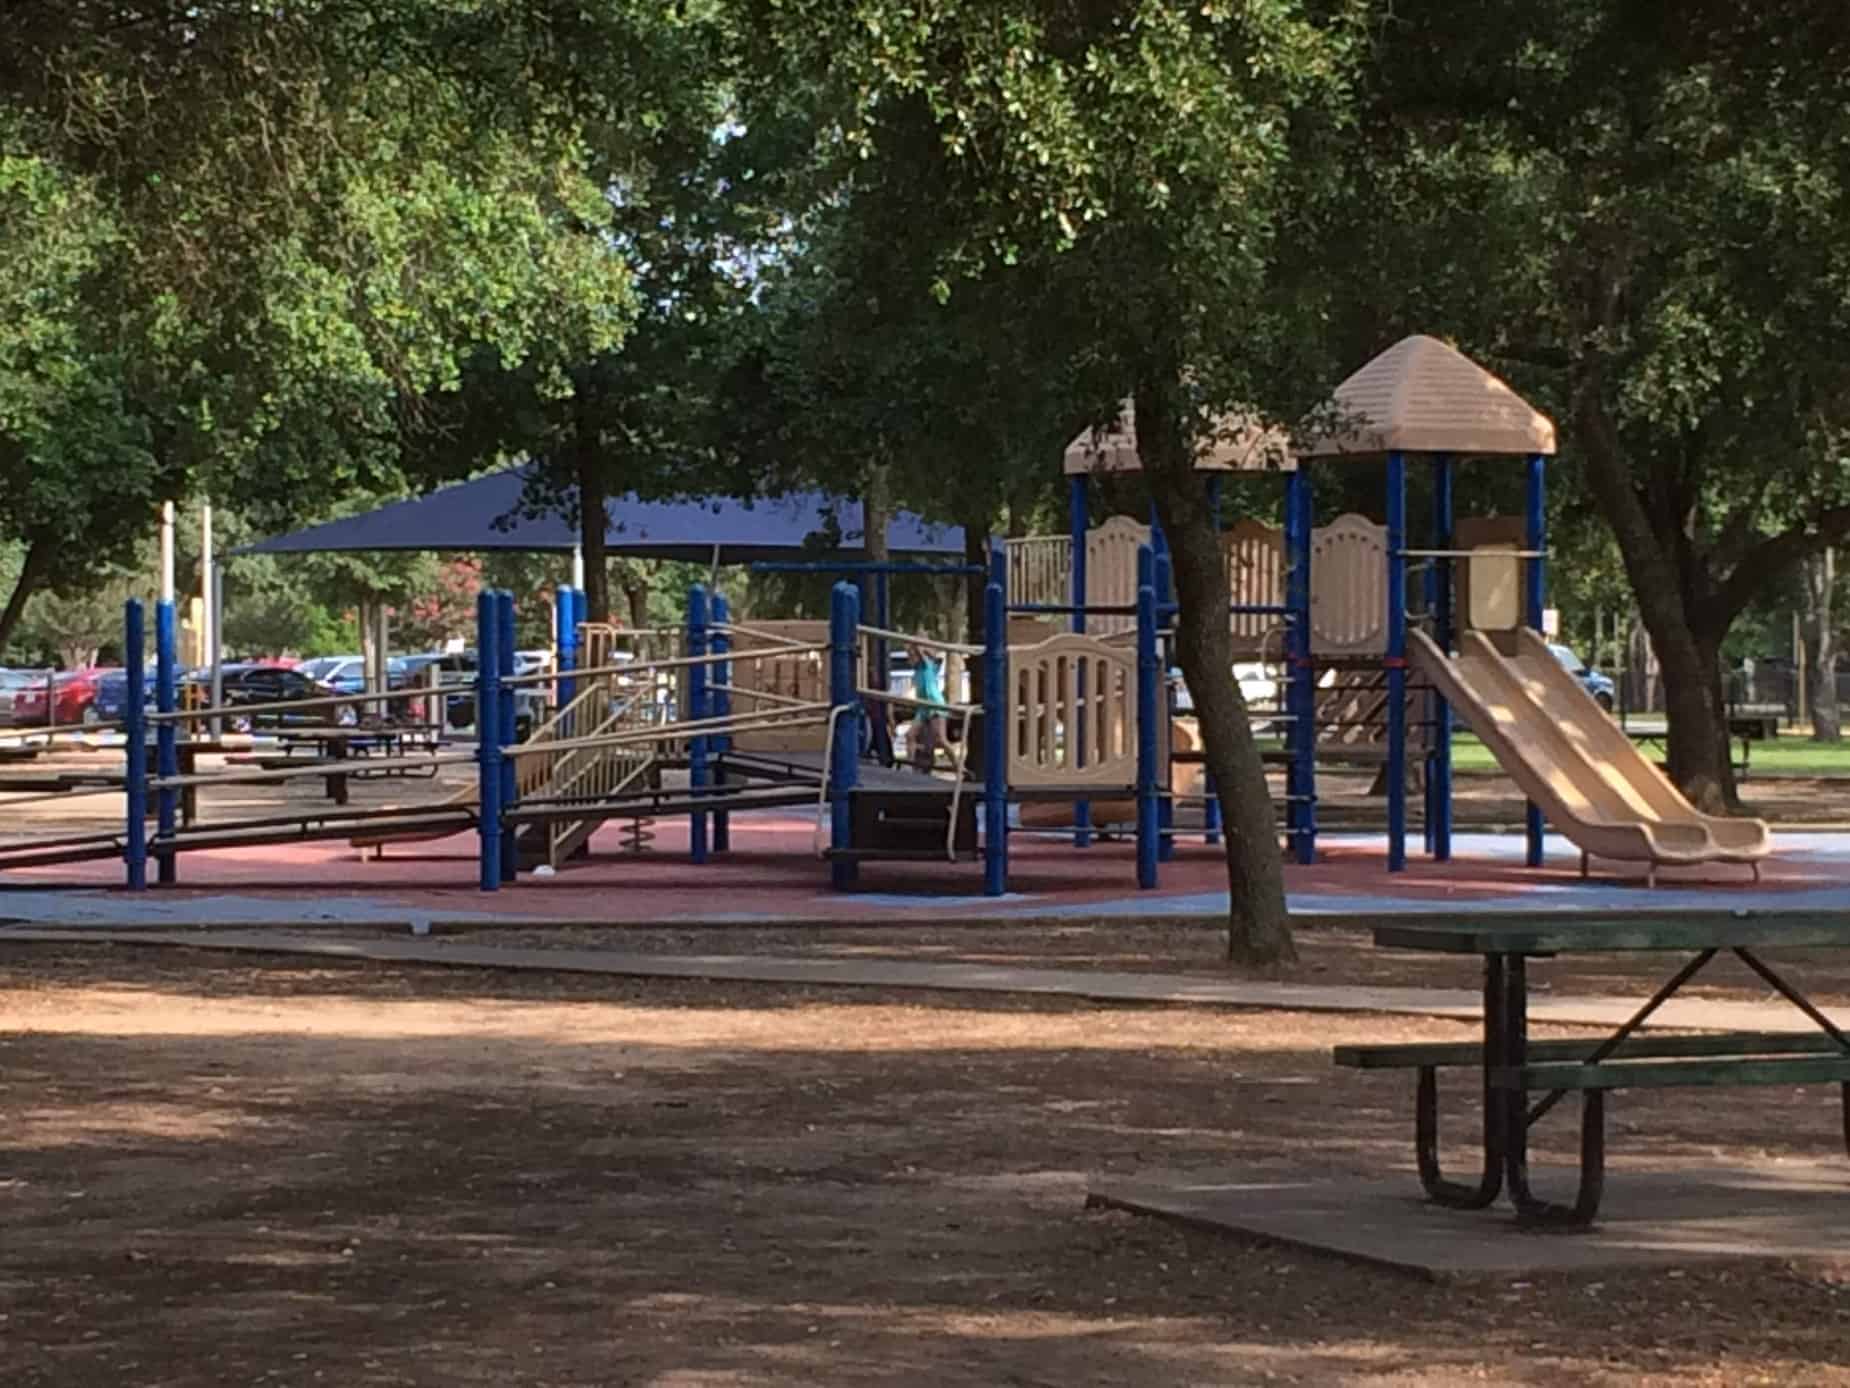 Playground for older kids at Mary Jo Peckham Park Katy TX